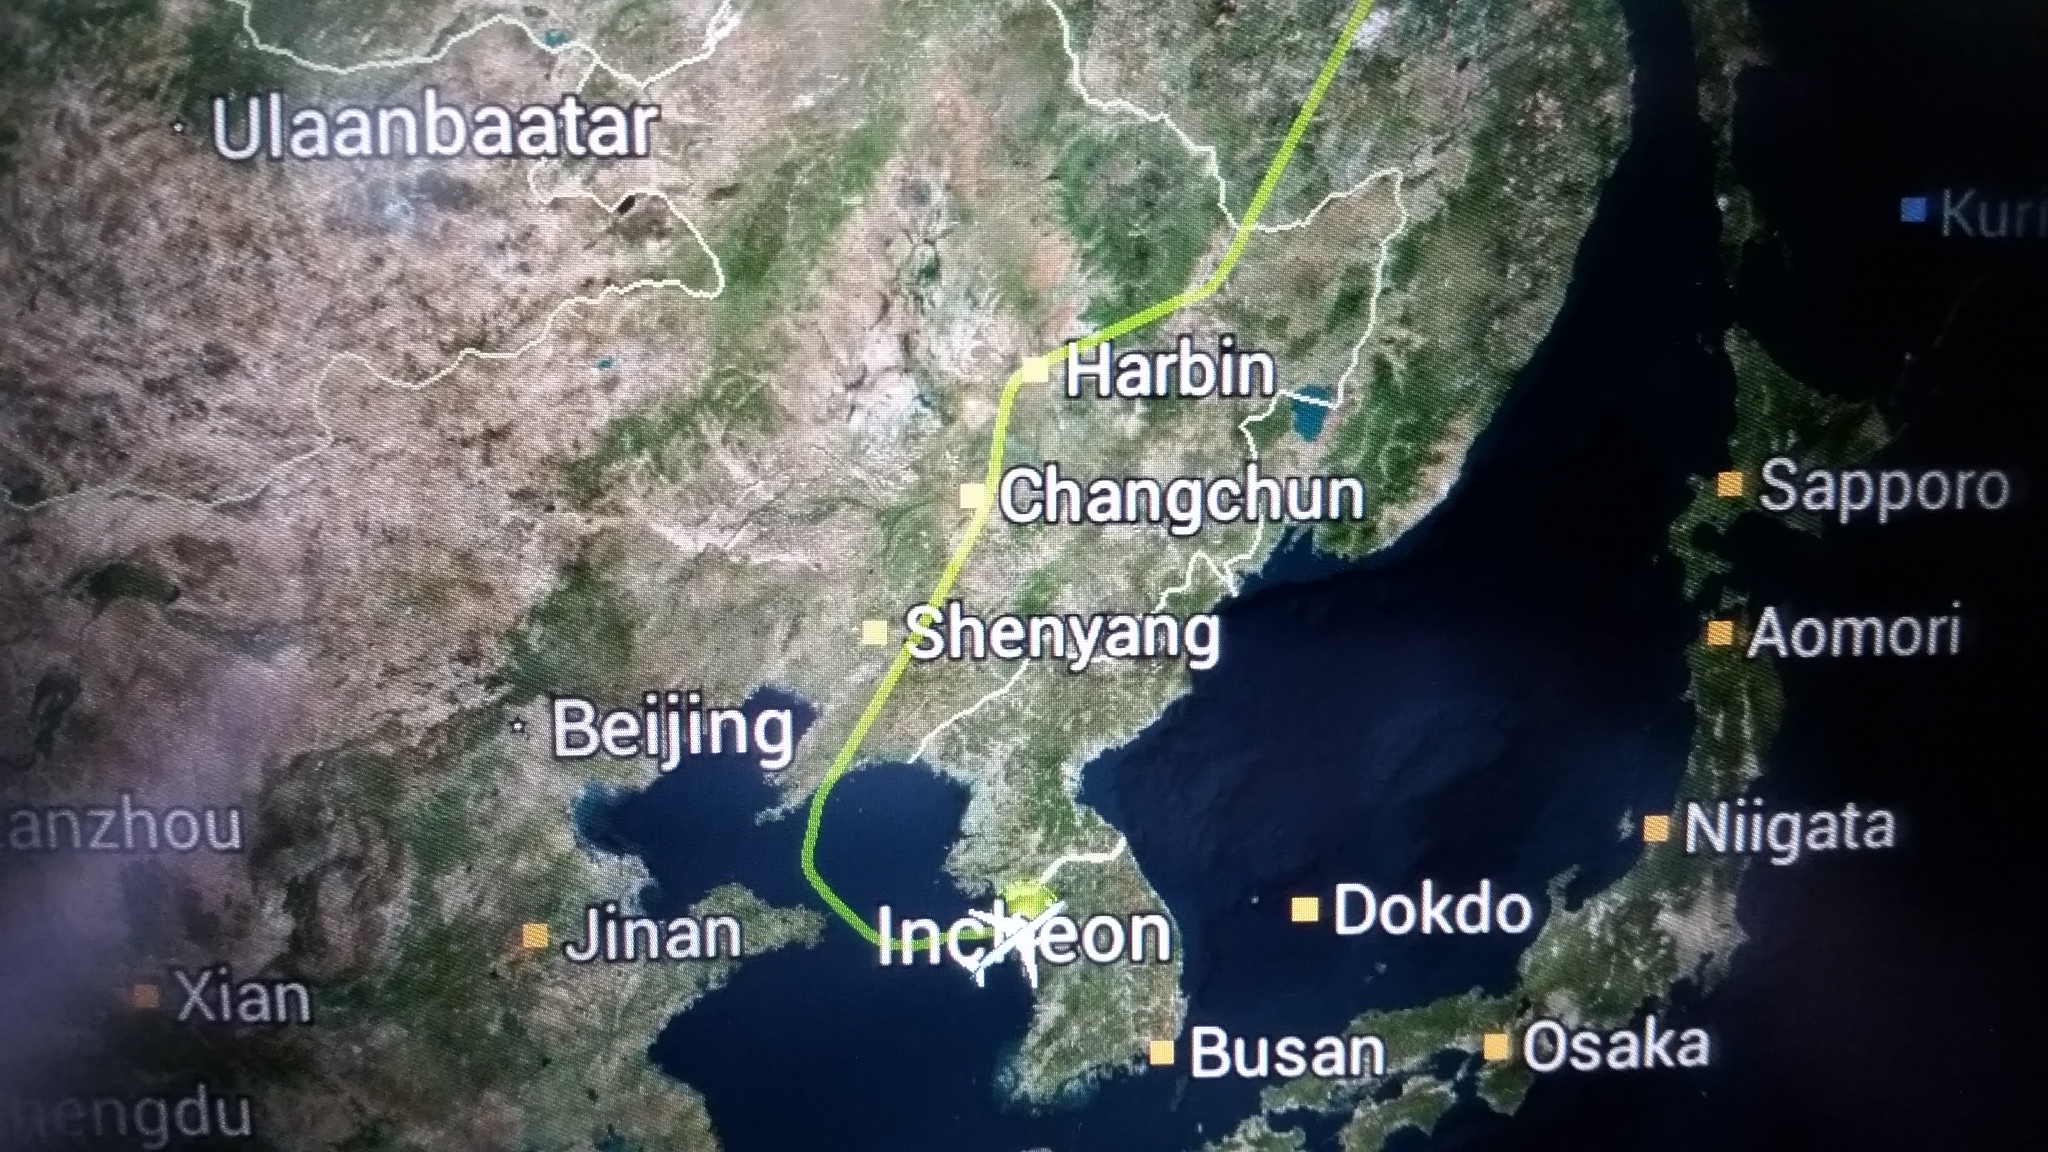 KE020 flight path avoids North Korean airspace